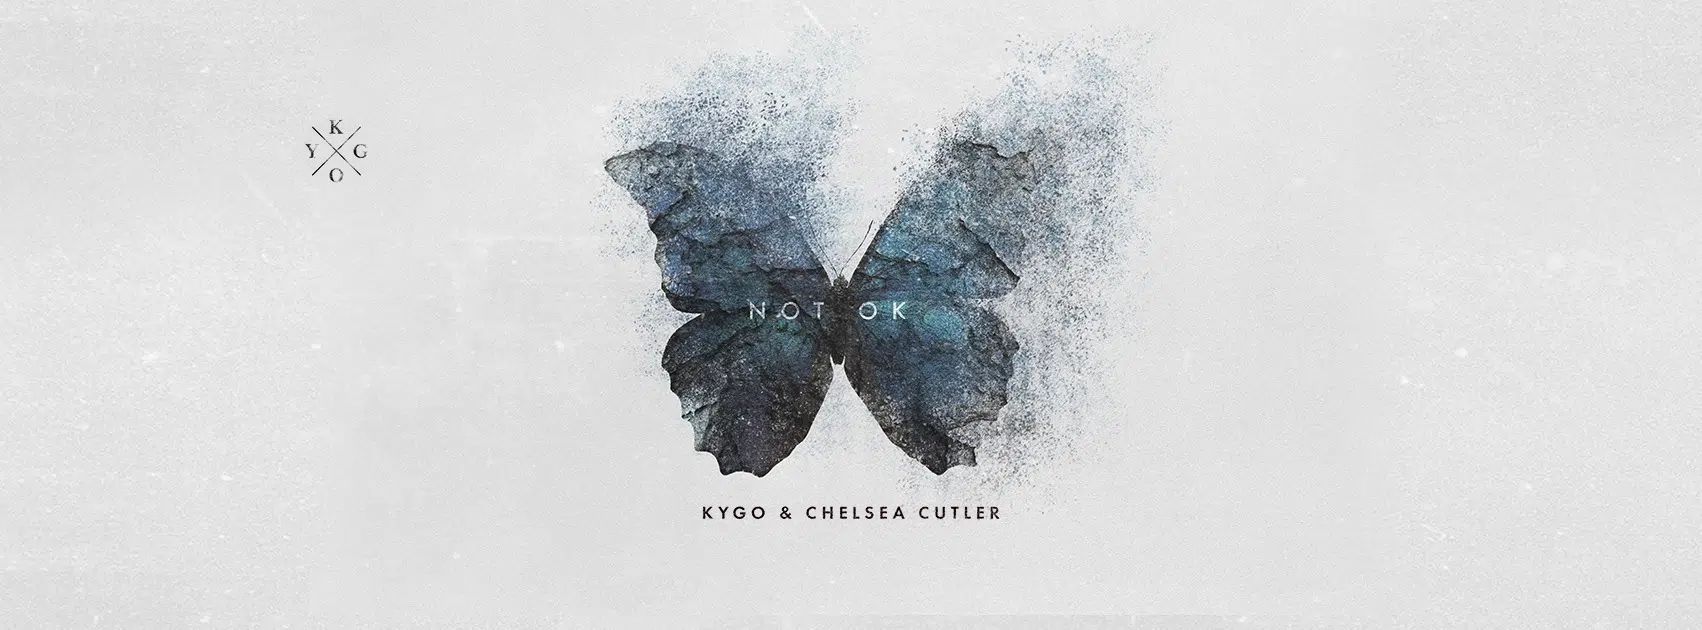 (New Music) Kygo and Chelsea Cutler - Not Ok 